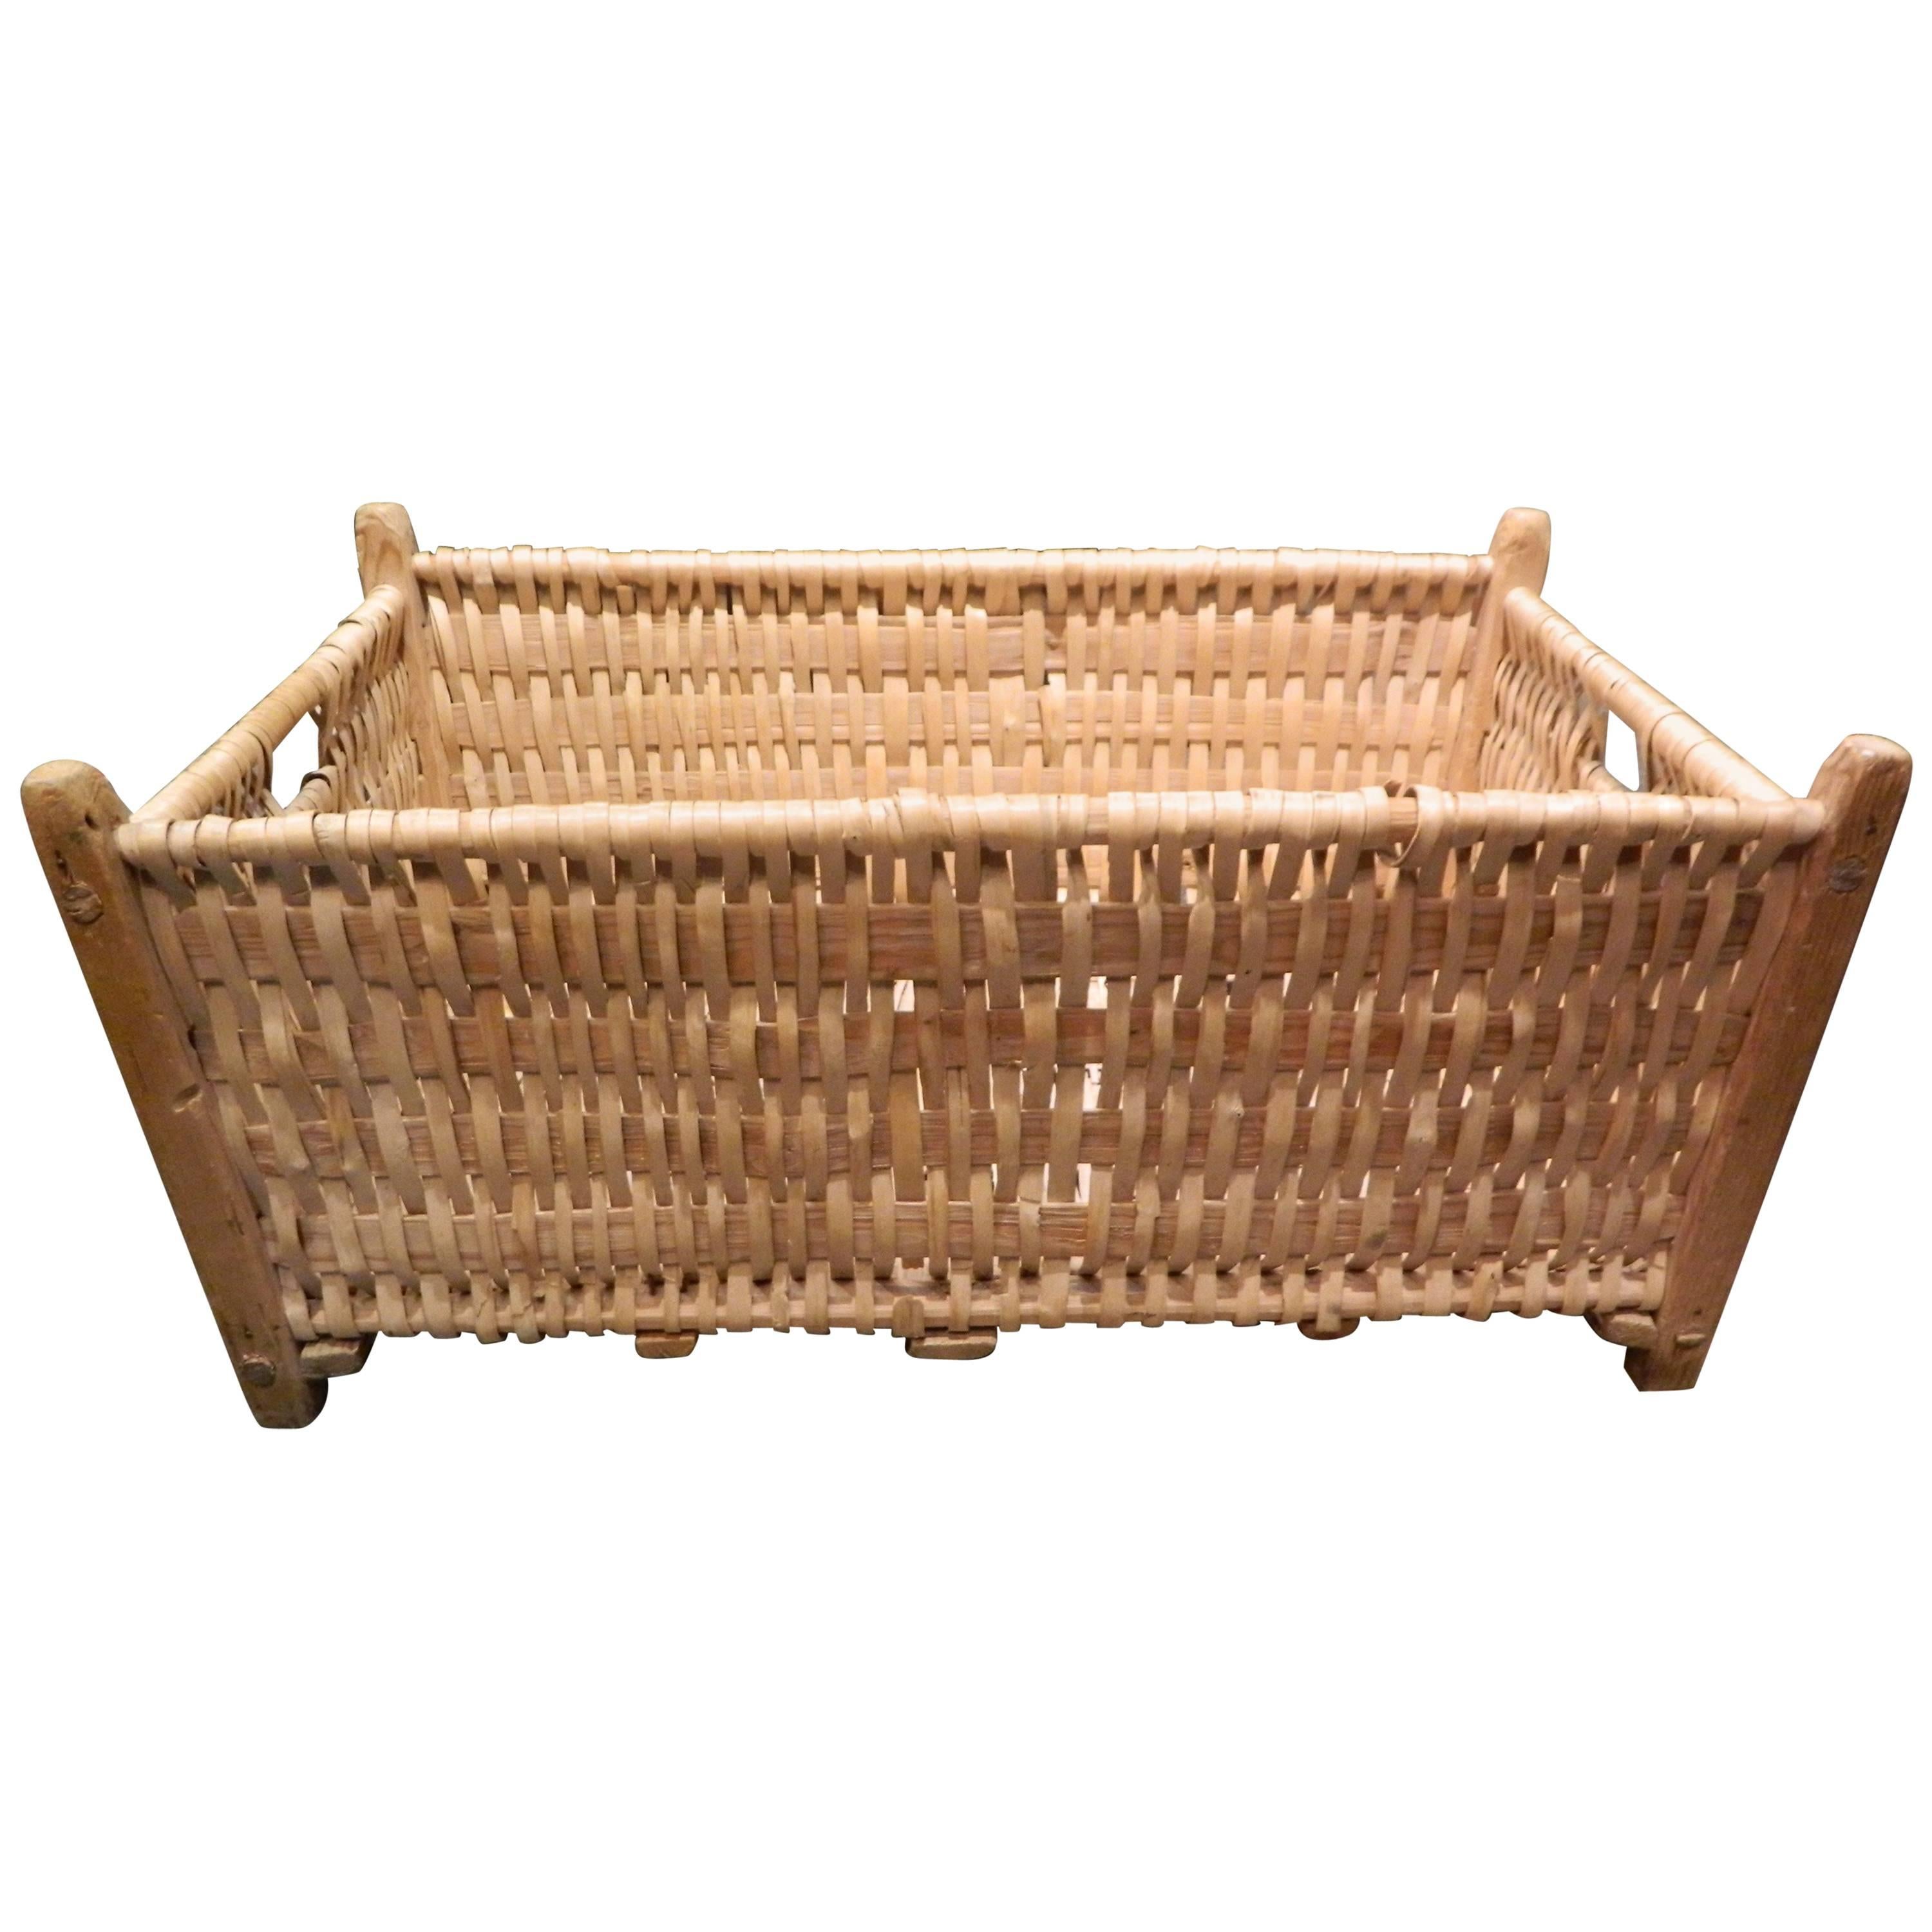 French Rectangular Laundry Basket, Late 19th Century